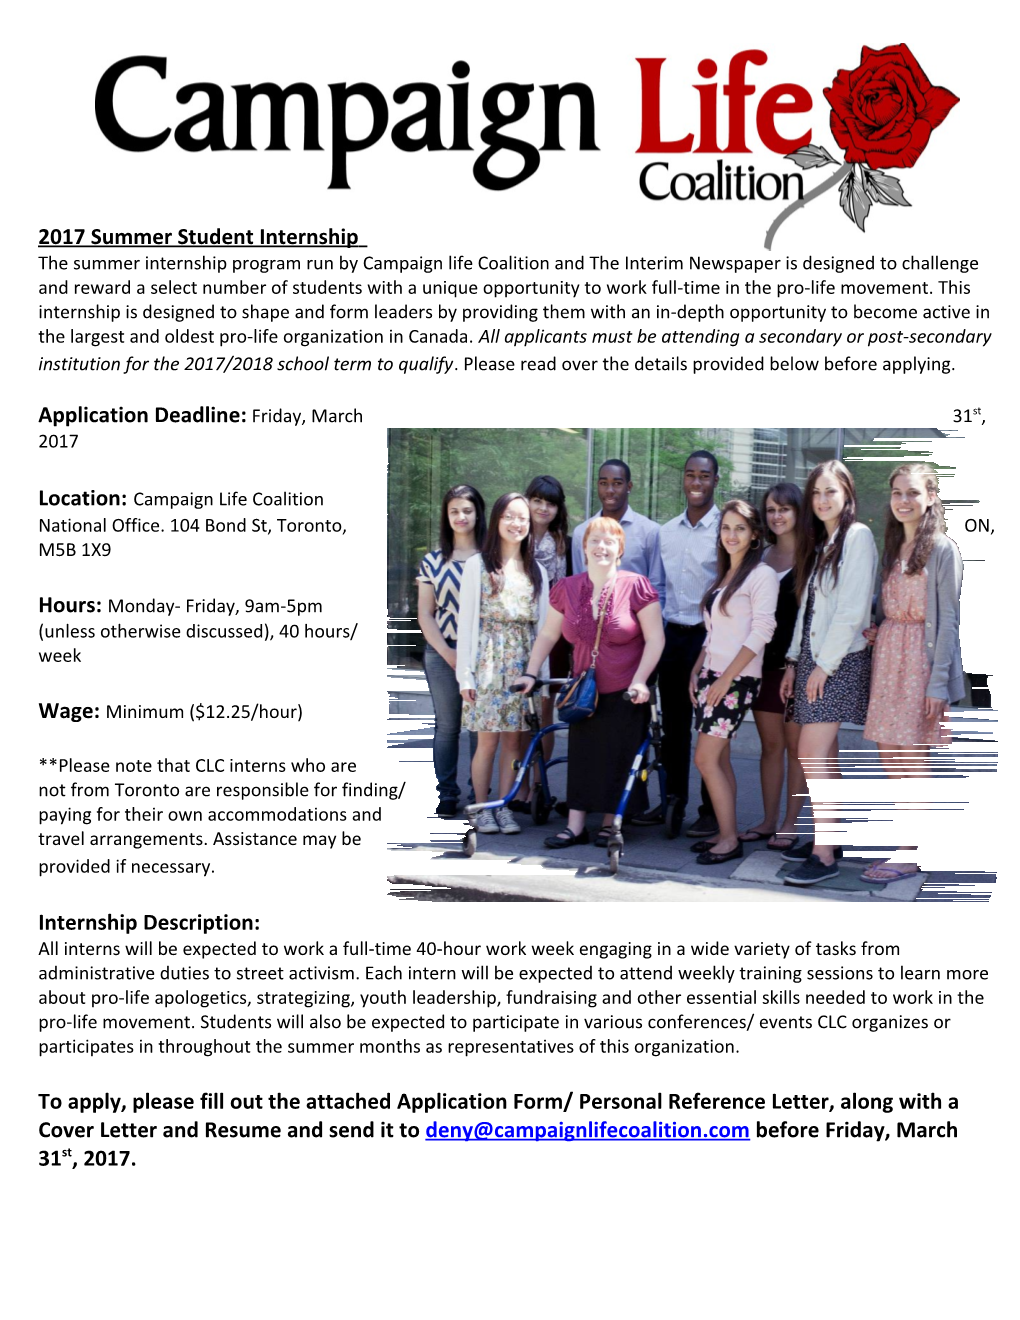 2017 Summer Student Internship the Summer Internship Program Run by Campaign Life Coalition